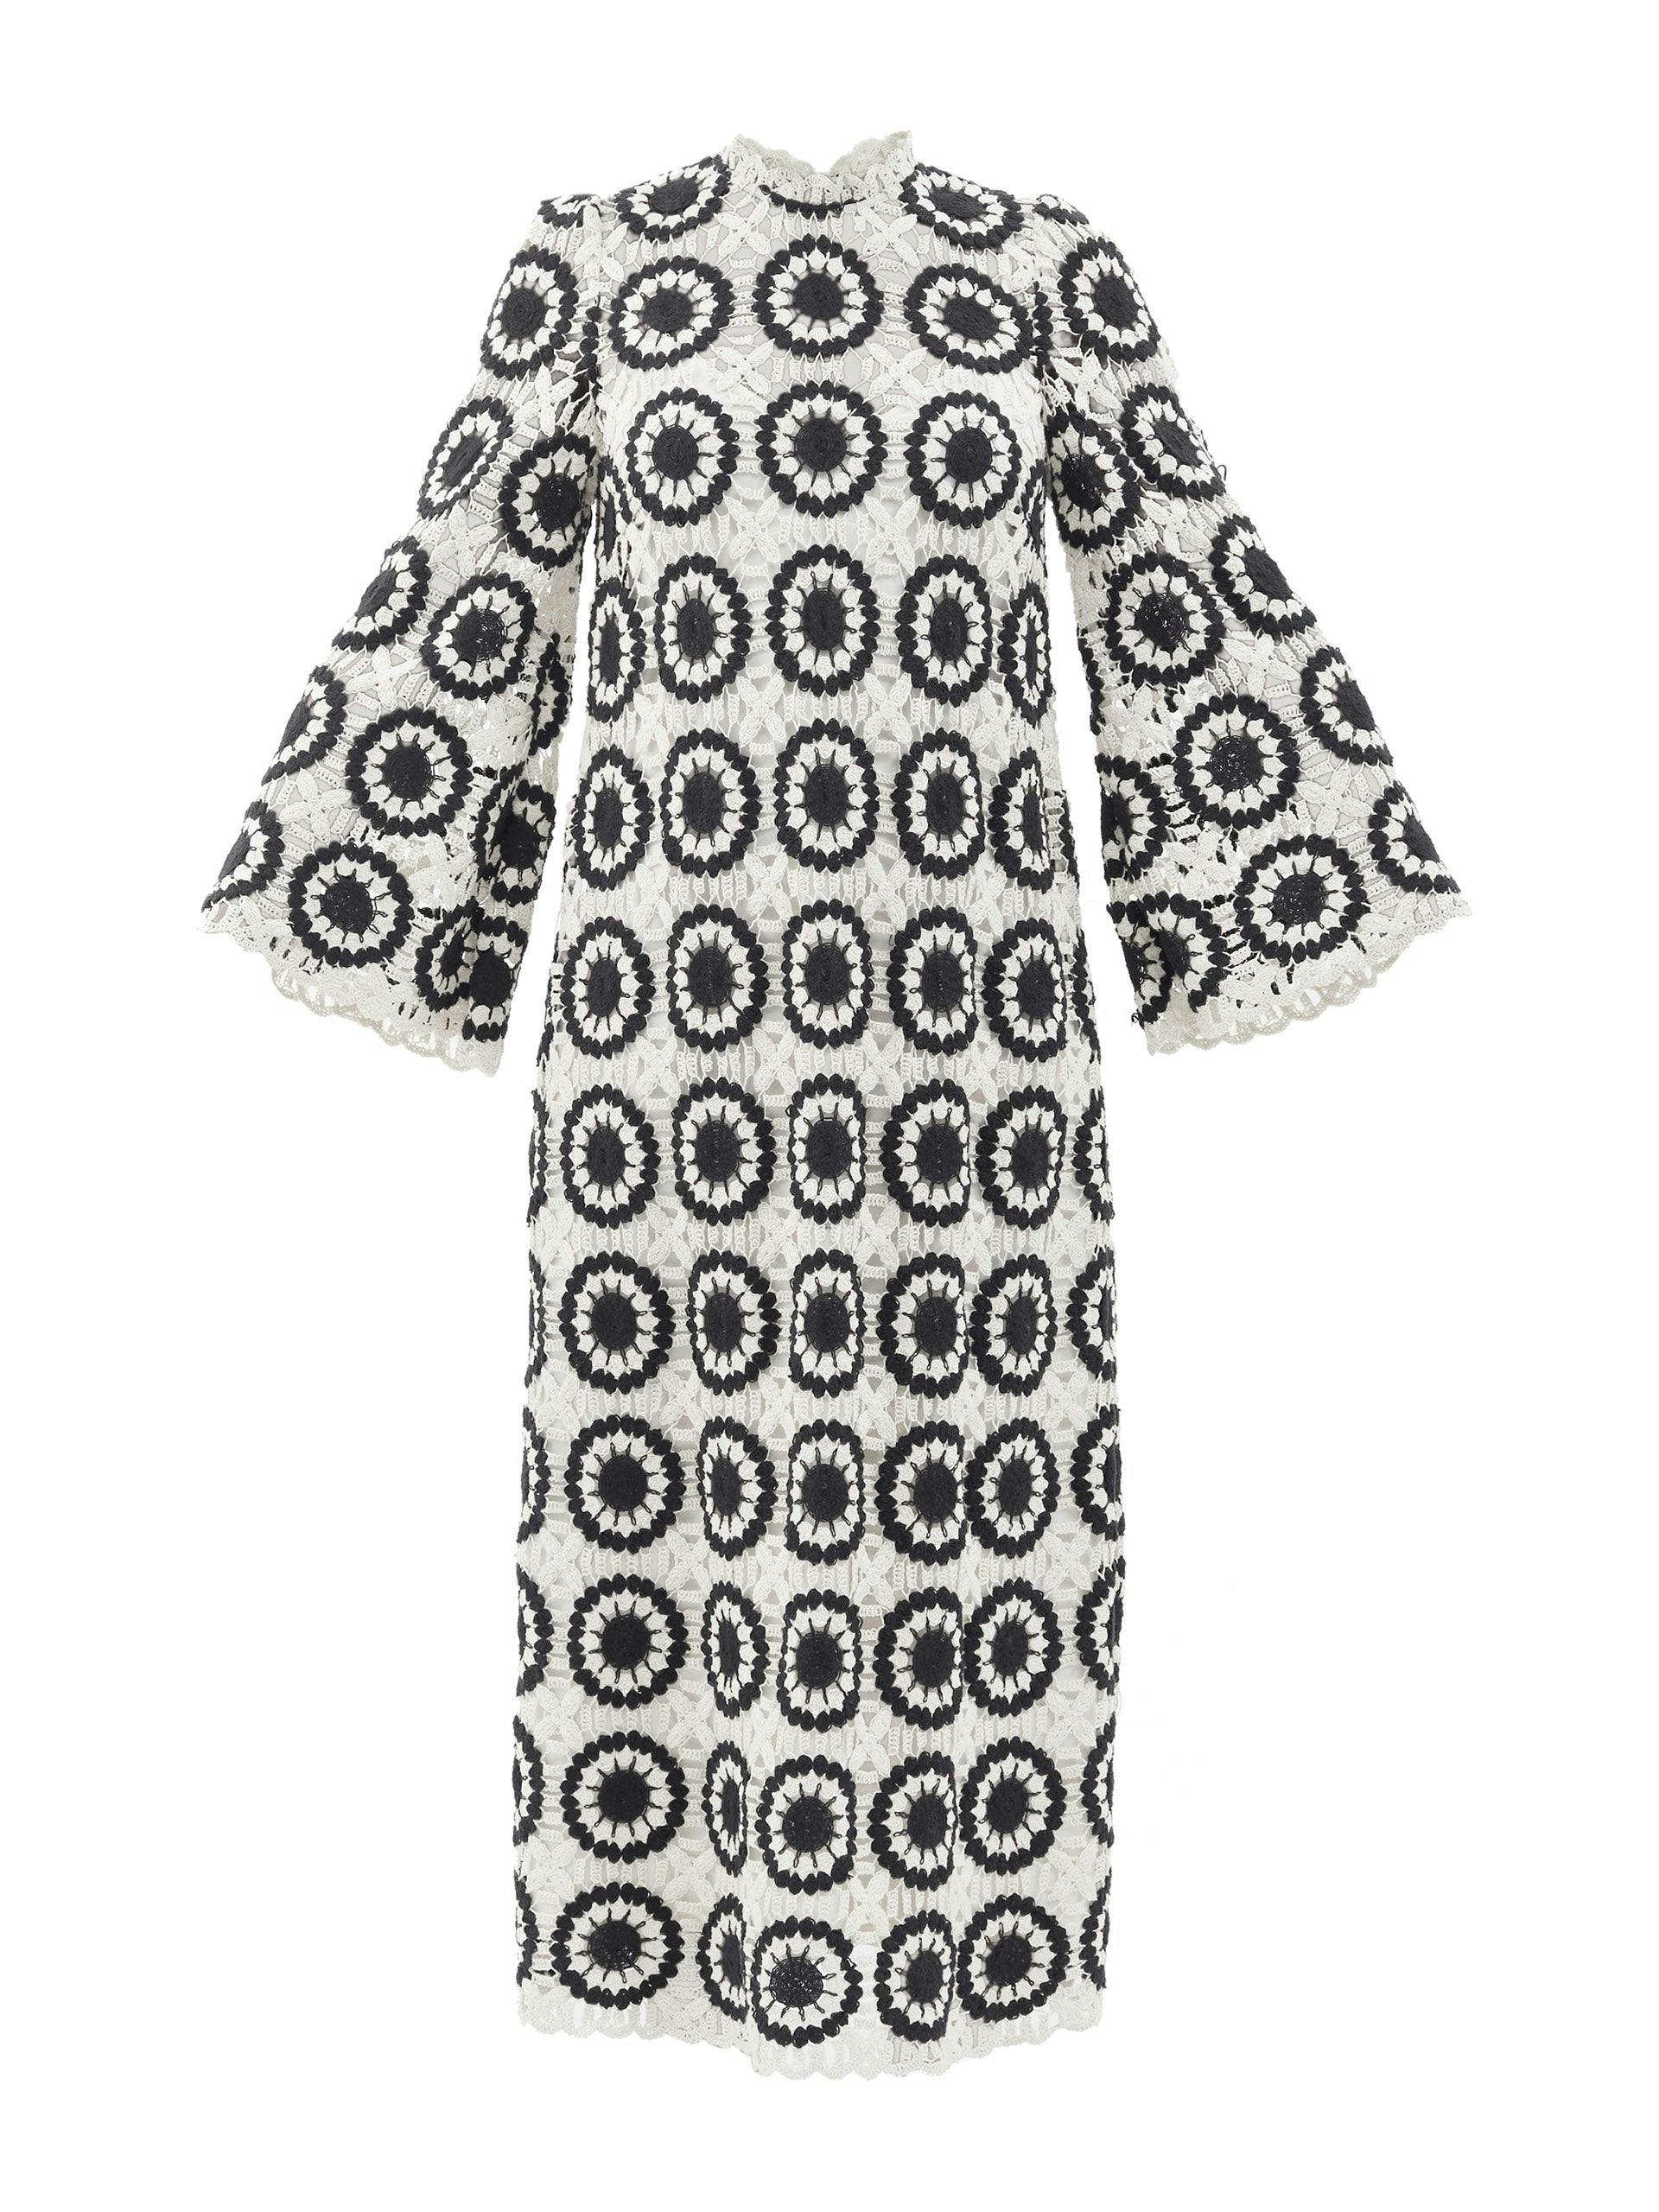 Cream and black wide-sleeve crocheted dress